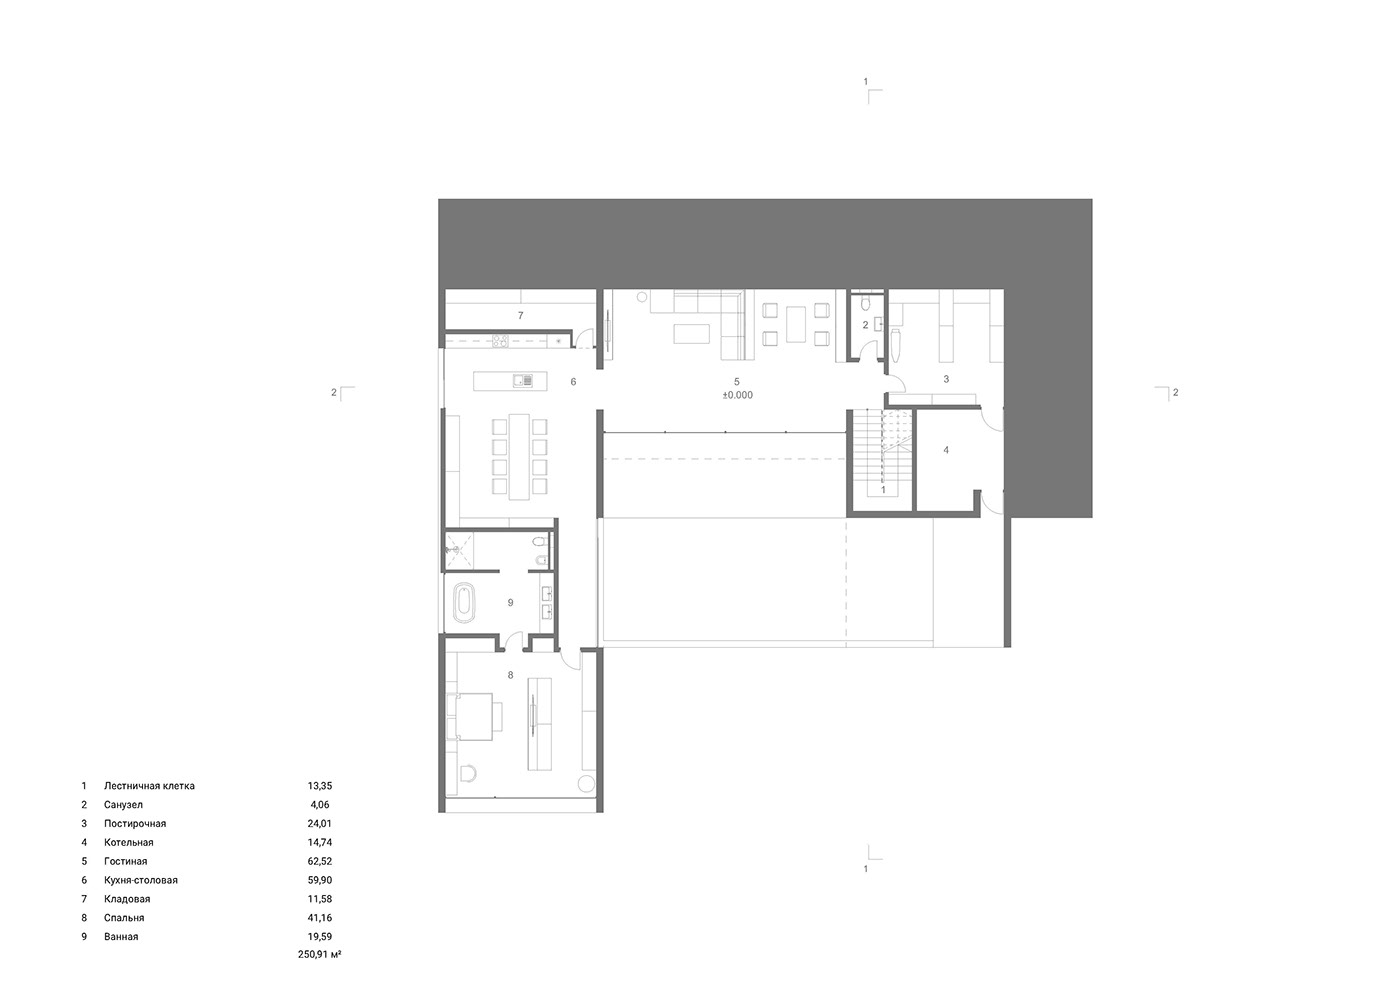 3ds max architect architecture clean corona exterior minimal modern visualization White